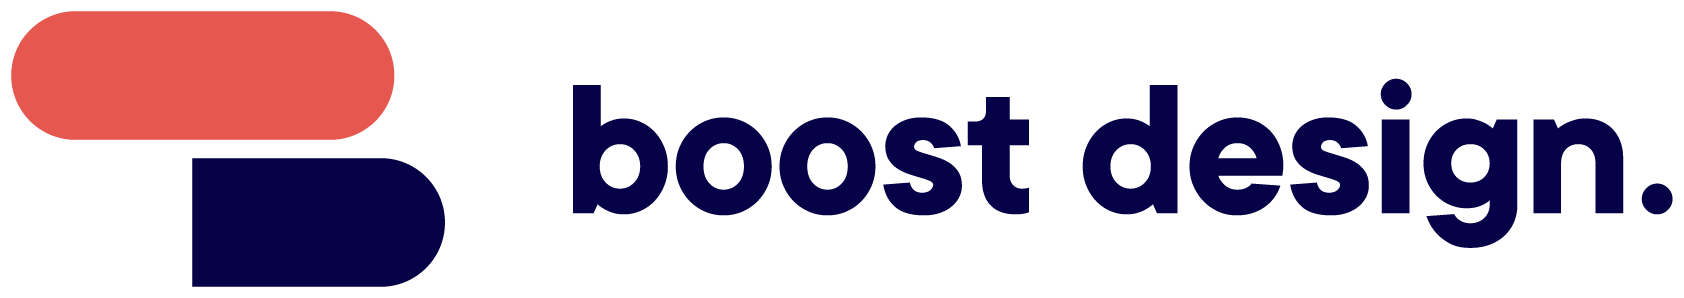 boost design logo